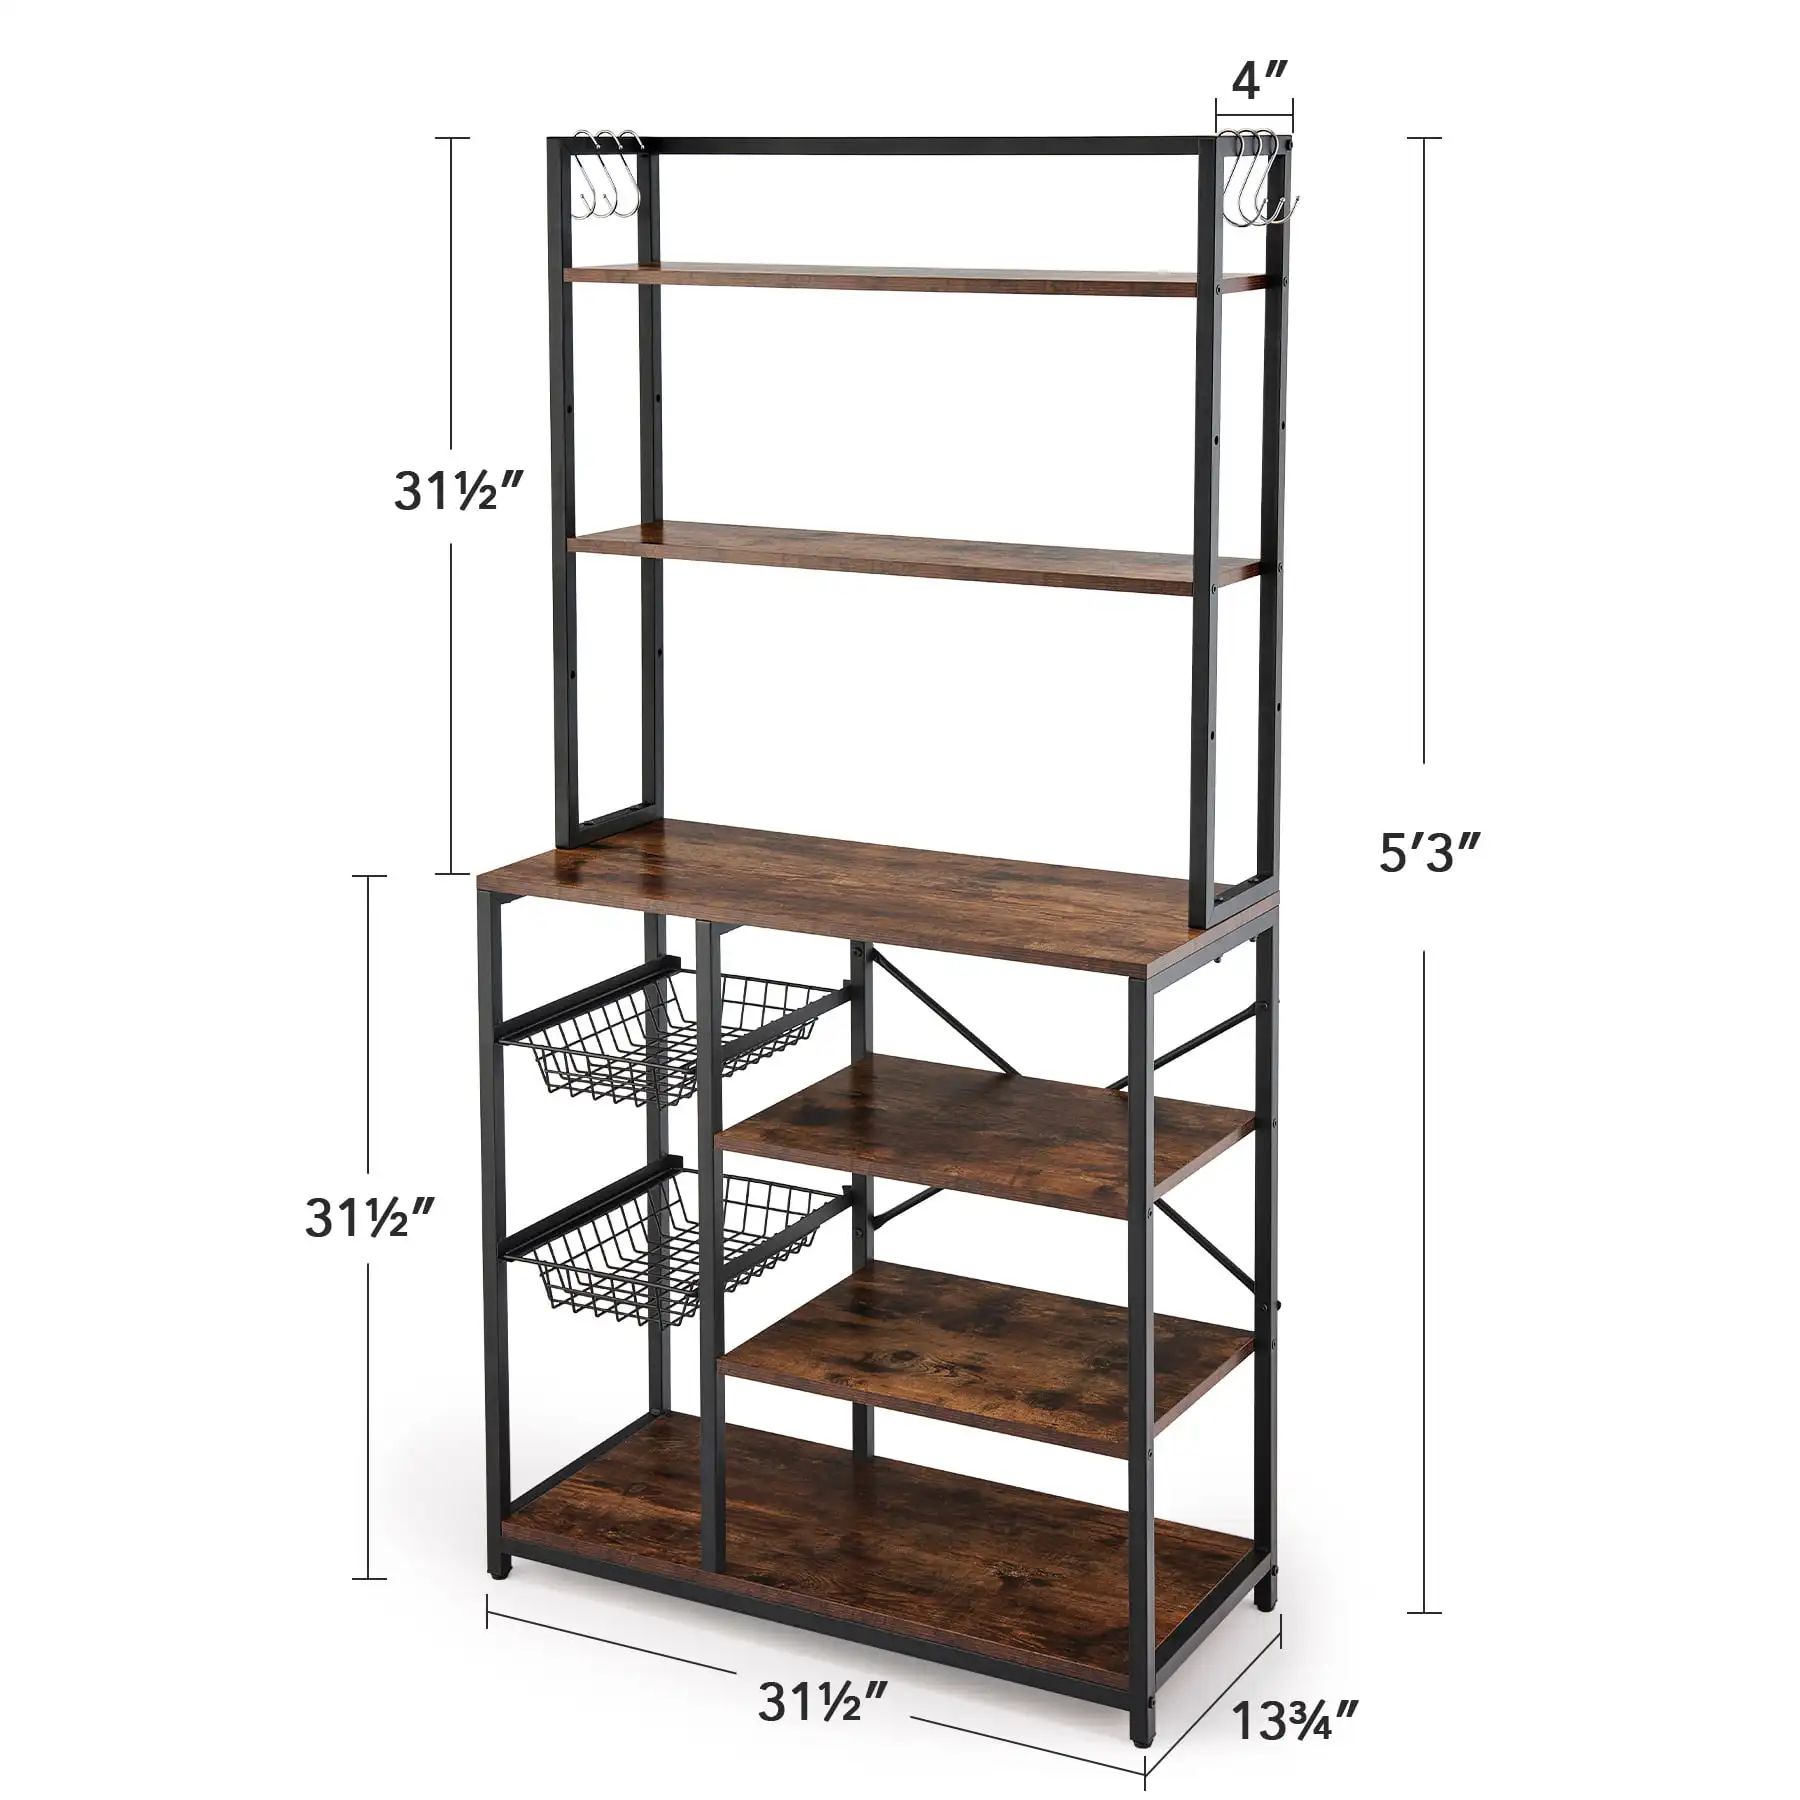 

Bestco 6 Tier Shelf with Adjustable Racks Baskets Kitchen Bathroom Corner Storage Shelf